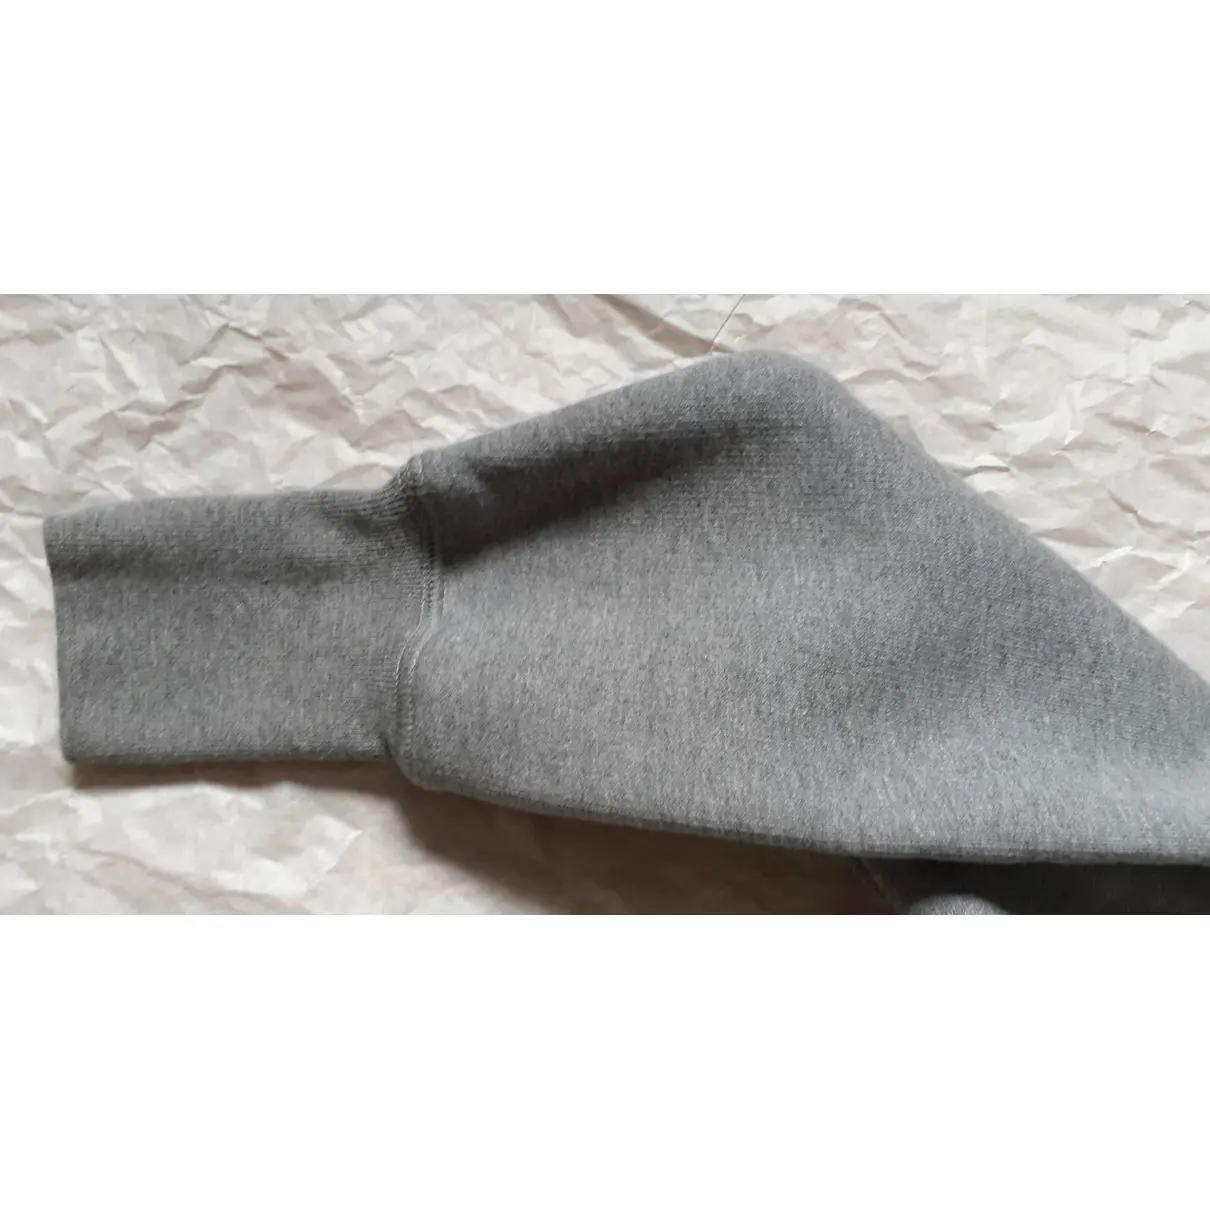 Grey Cotton Knitwear Alexander McQueen